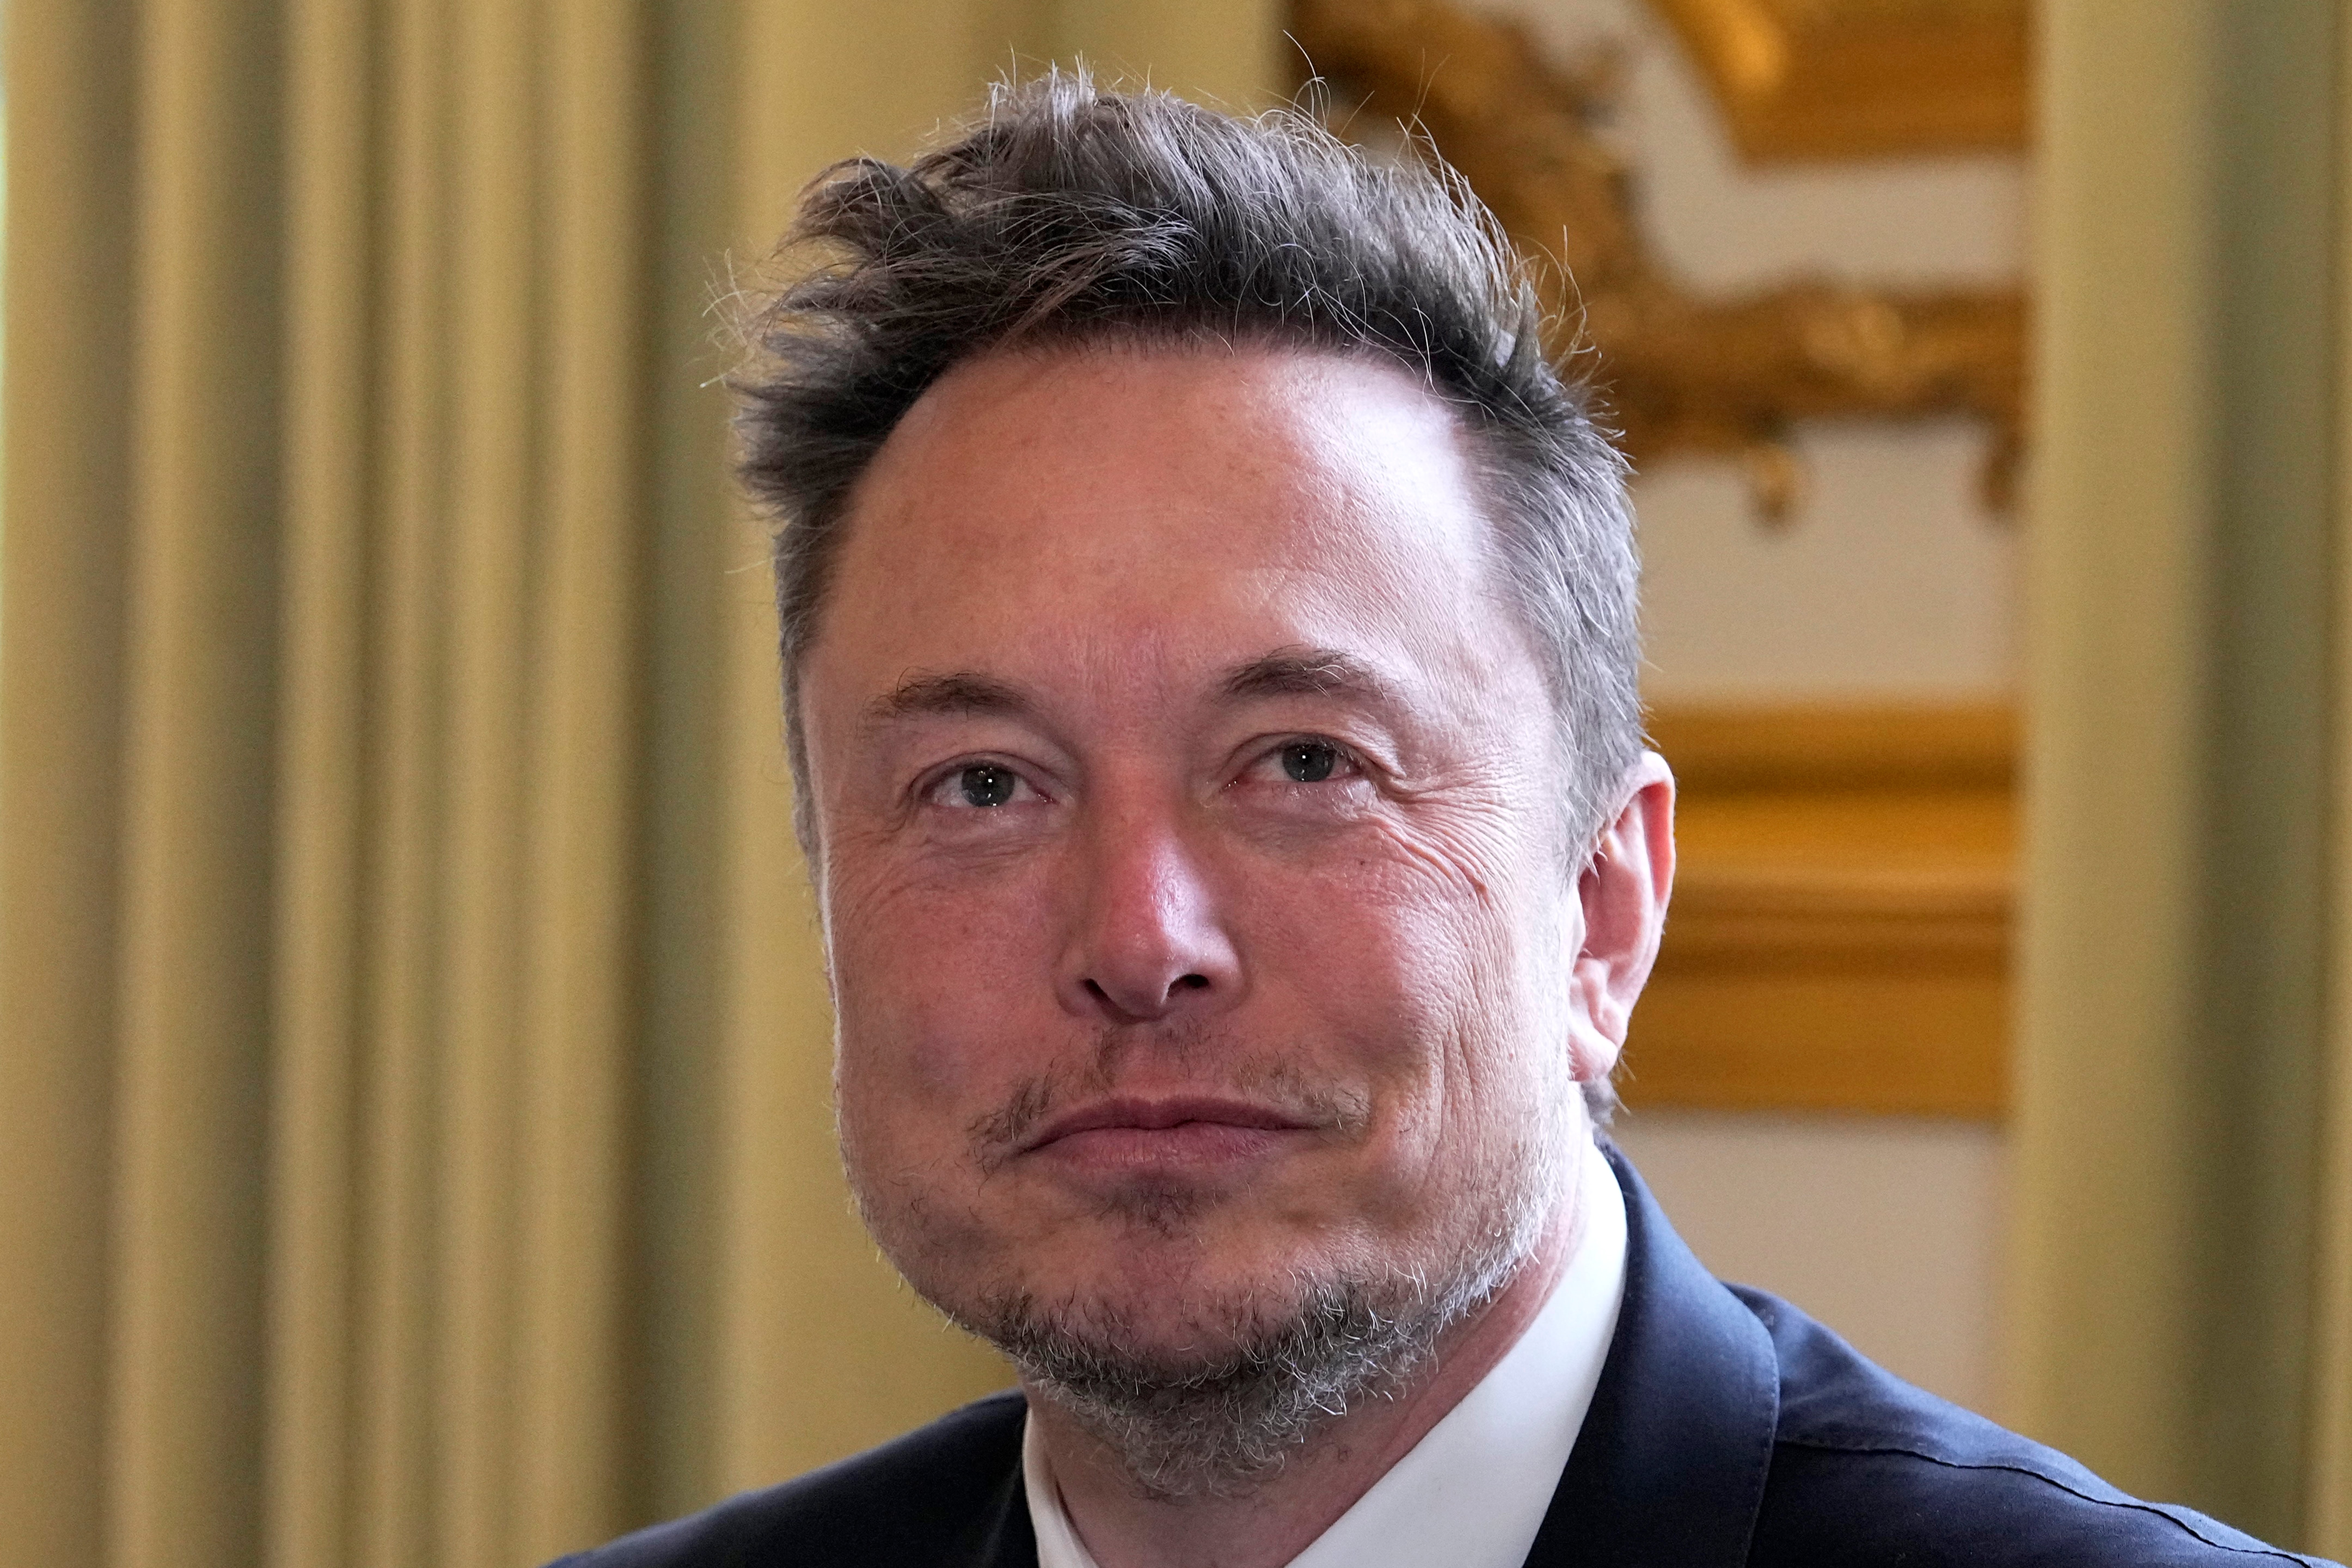 Canciller chino recibe a Elon Musk y se compromete a una “apertura de alto nivel”